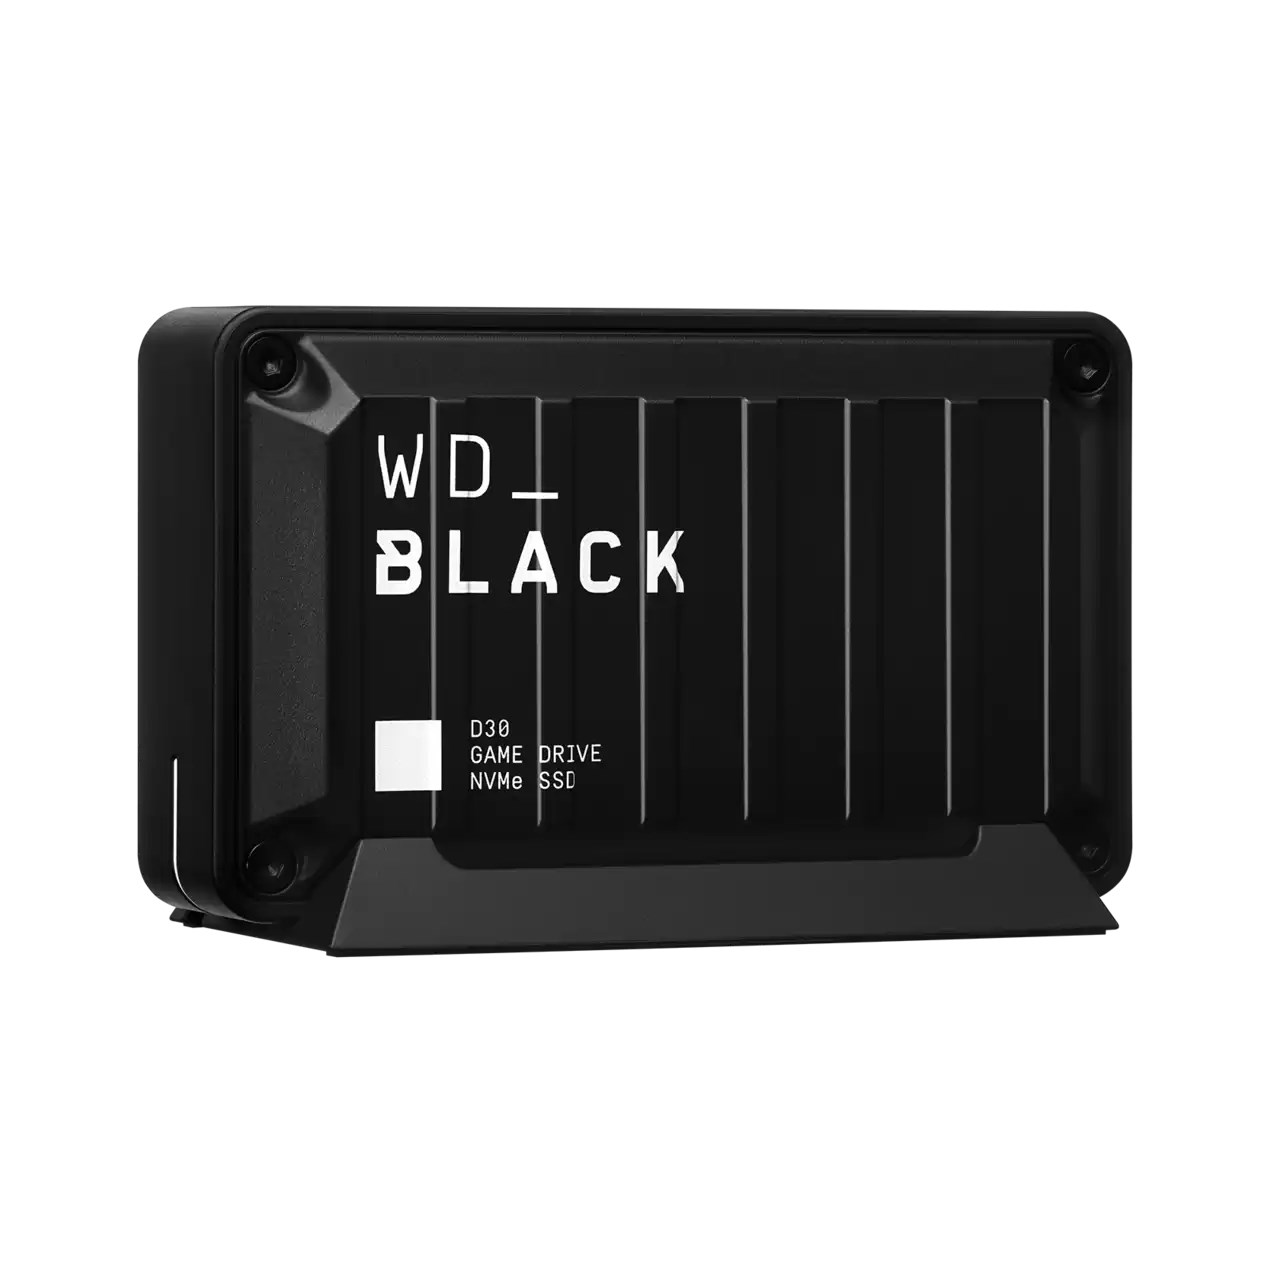 SanDisk externí SSD 2TB WD BLACK D30 Game Drive1 